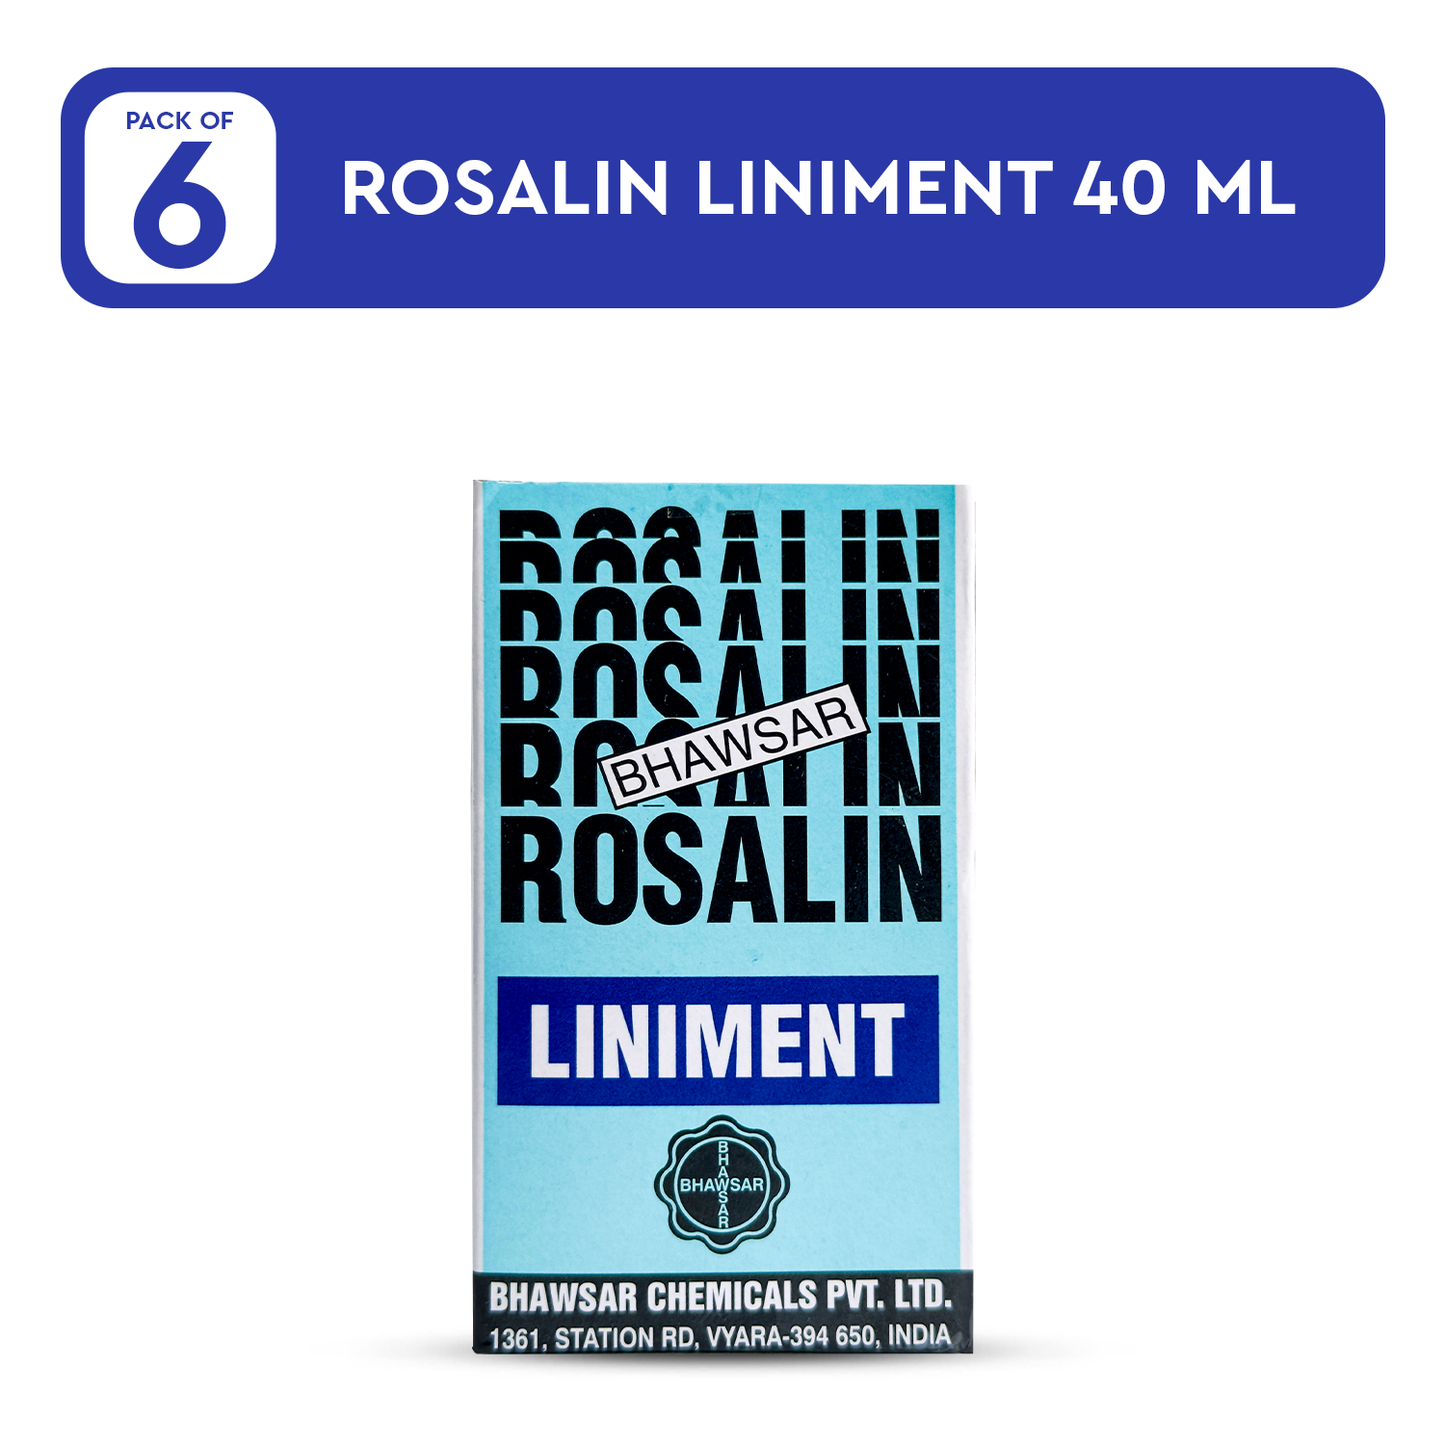 BHAWSAR Rosalin Liniment Oil